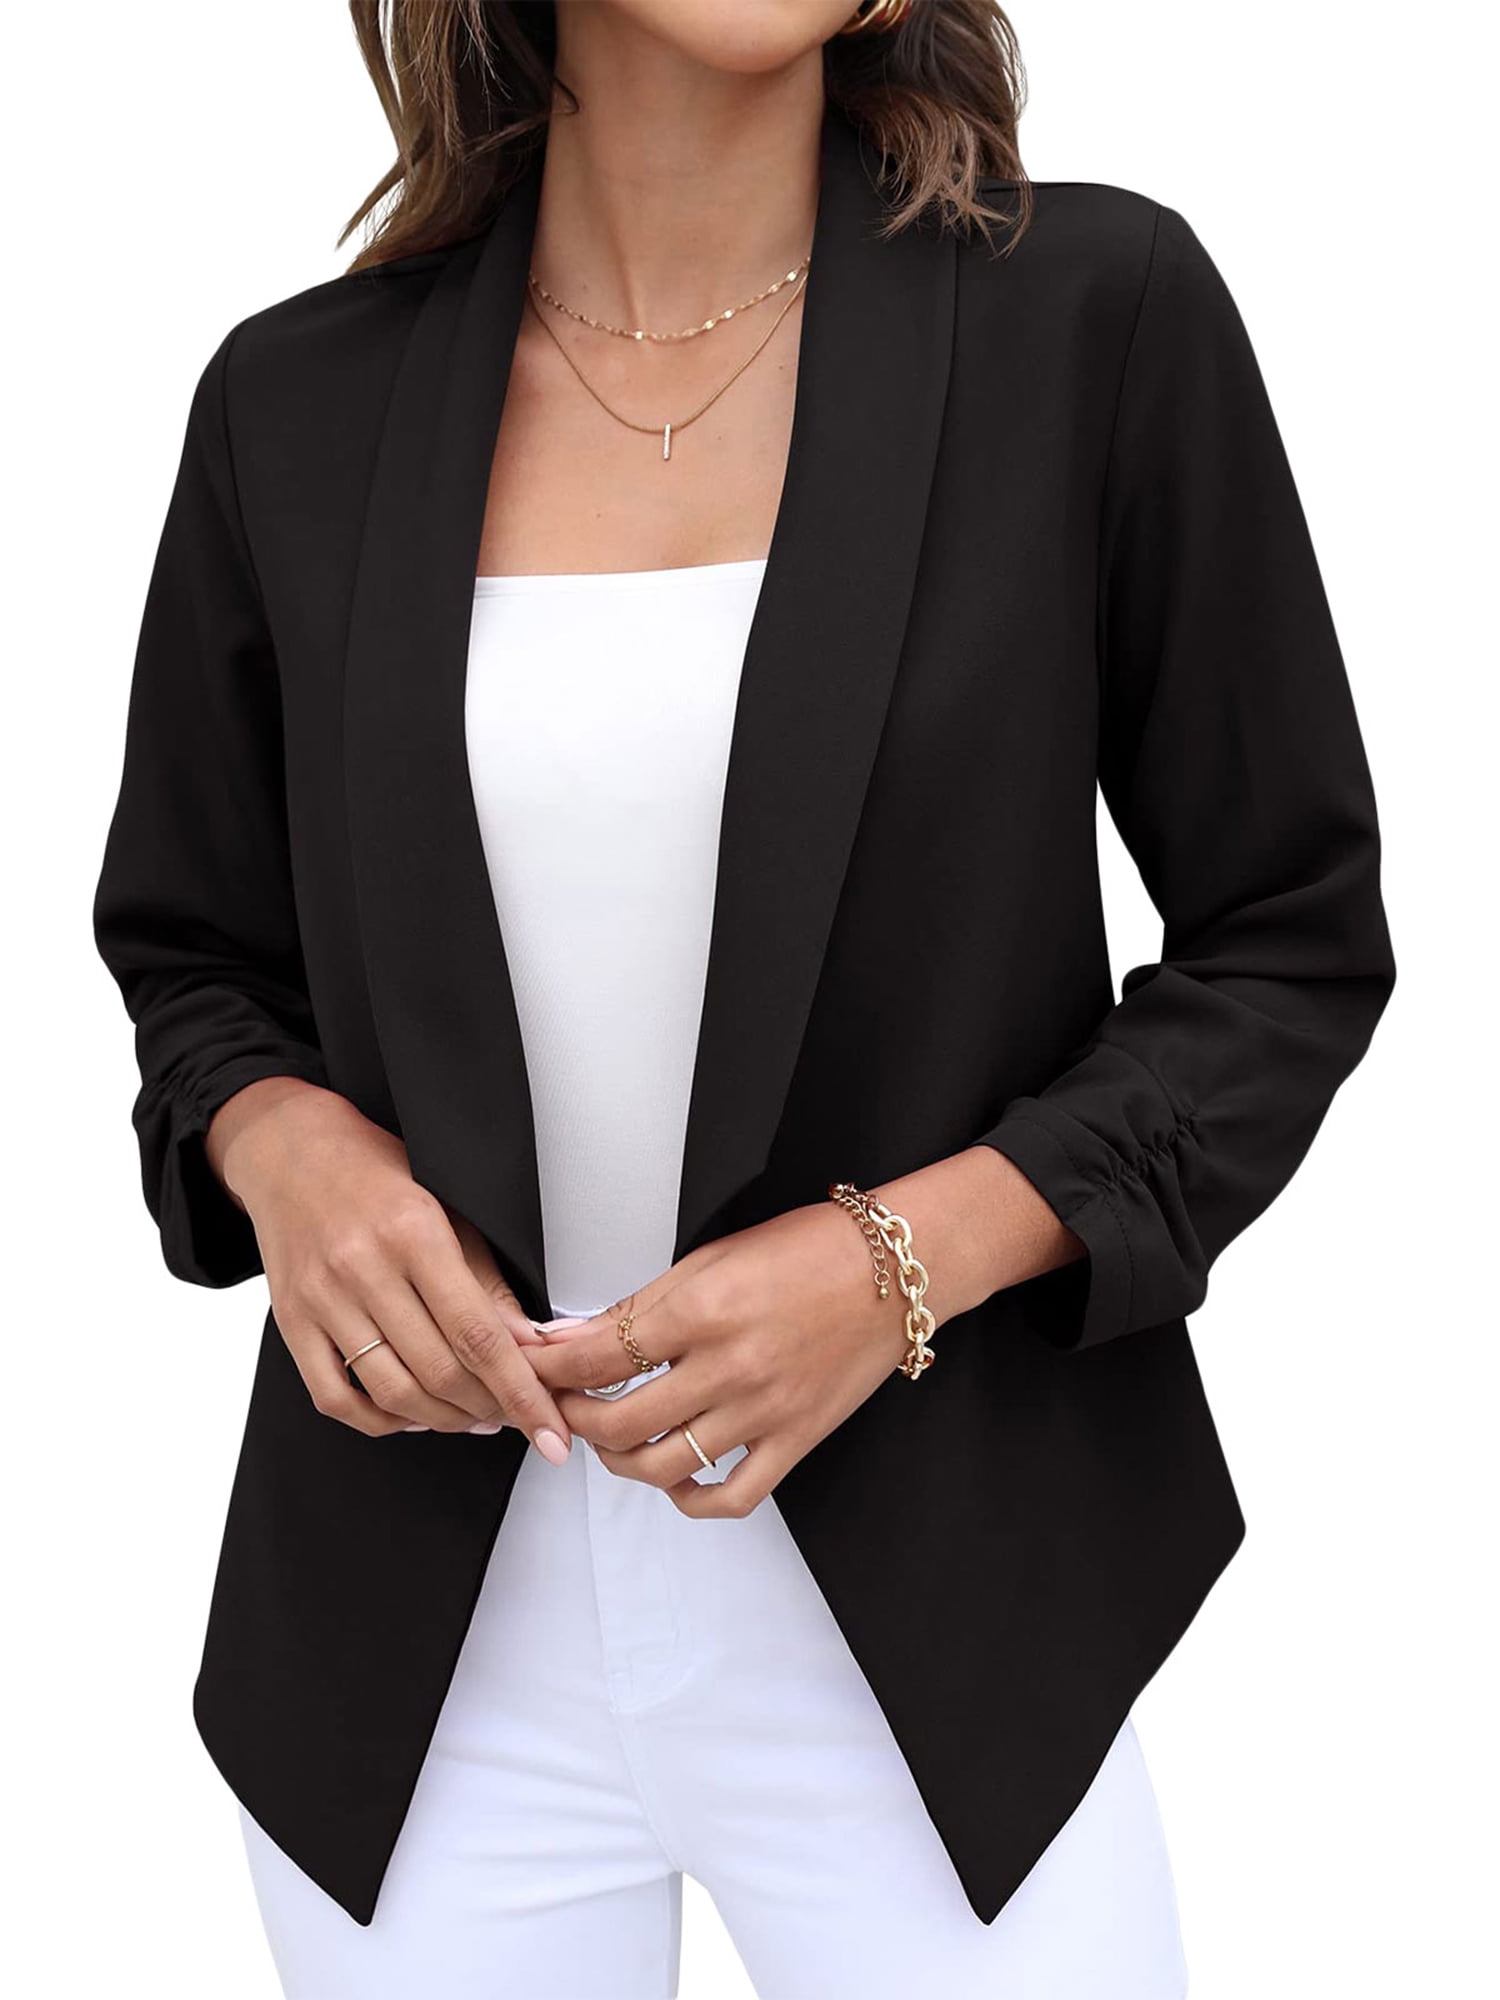 Women's Business Blazers Jacket Casual Petite Formal 3/4 Sleeve Outwear Printed Blazer Coat Cardigan Work Office Suits